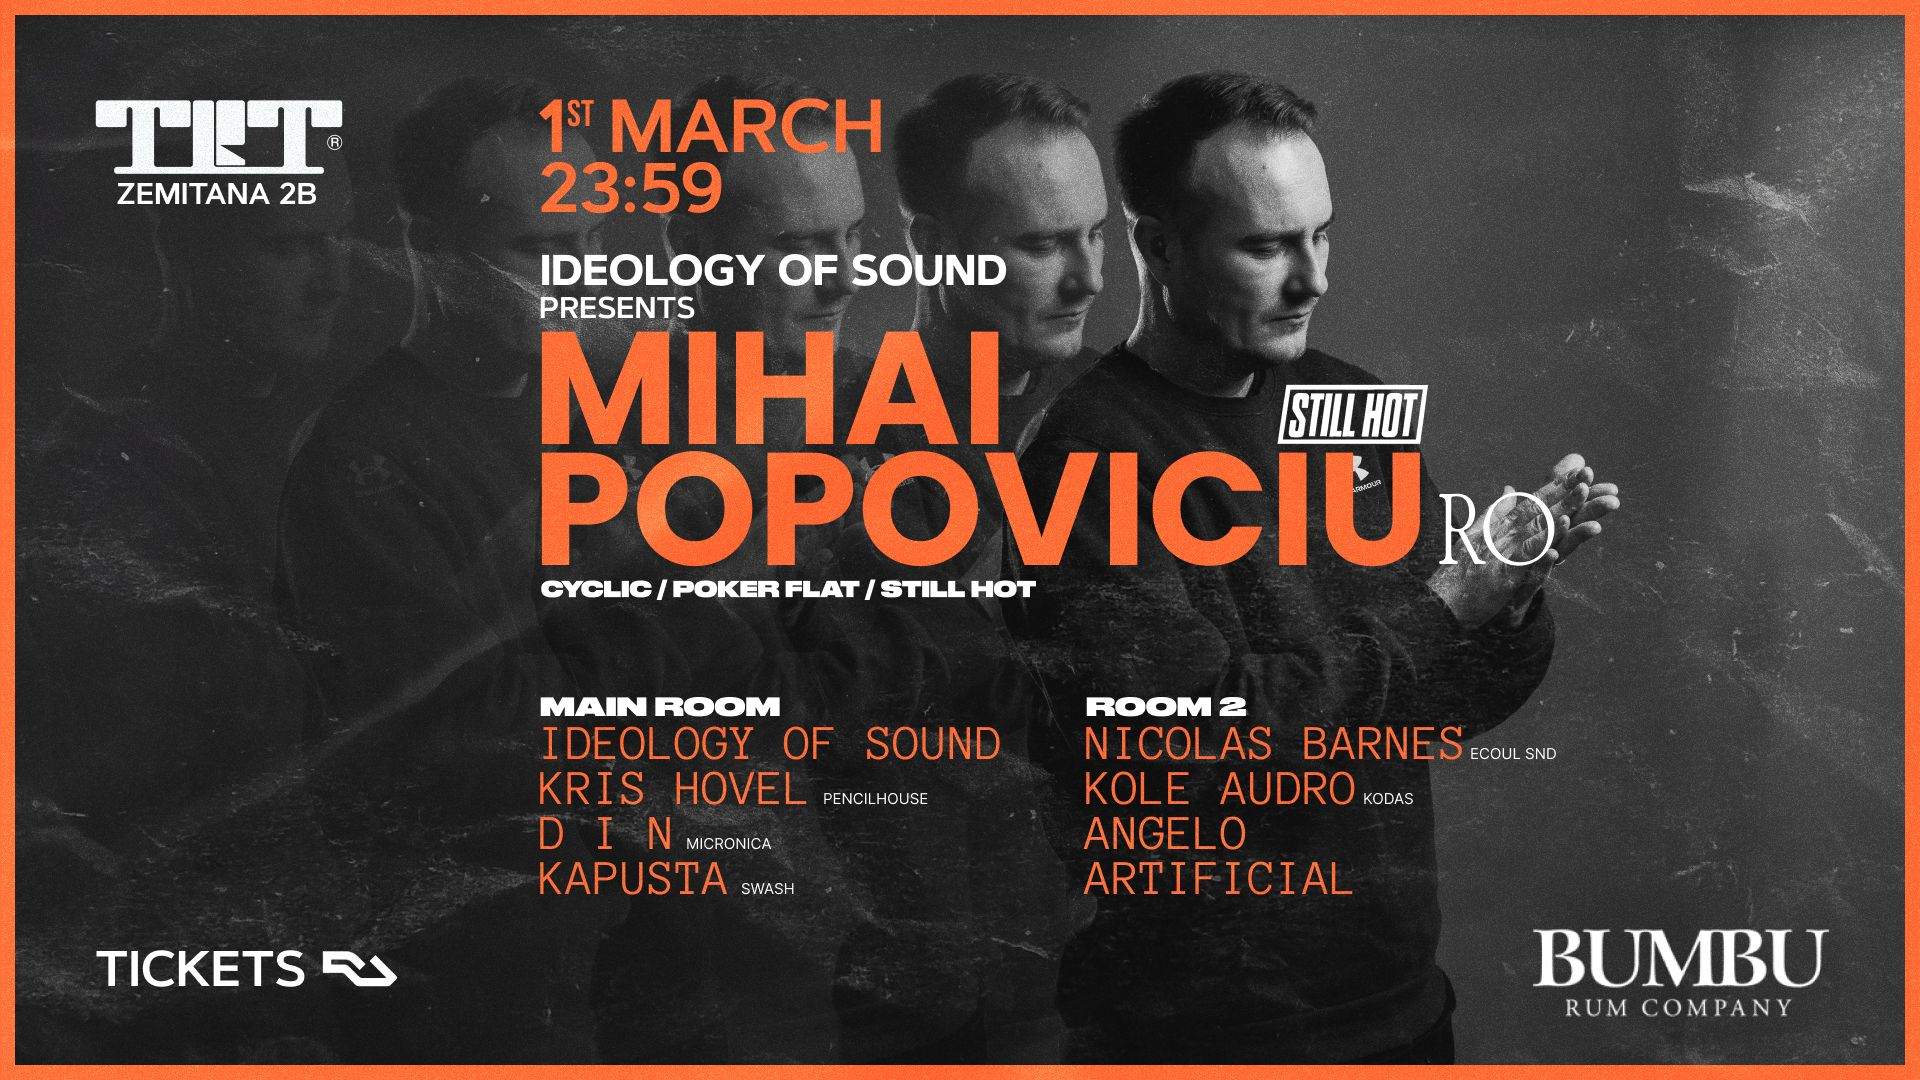 Ideology of Sound presents Mihai Popoviciu - Página frontal